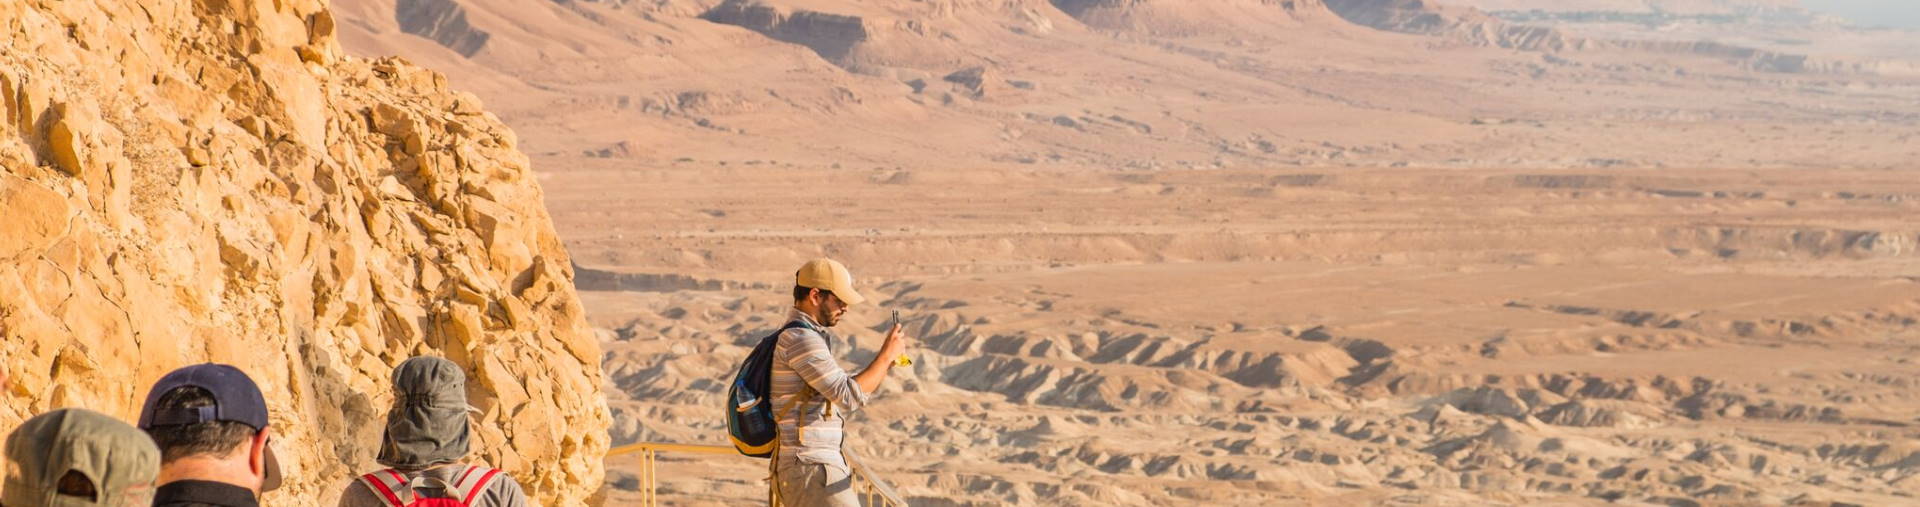 Masada, Ein Gedi & Dead Sea Tour from jerusalem